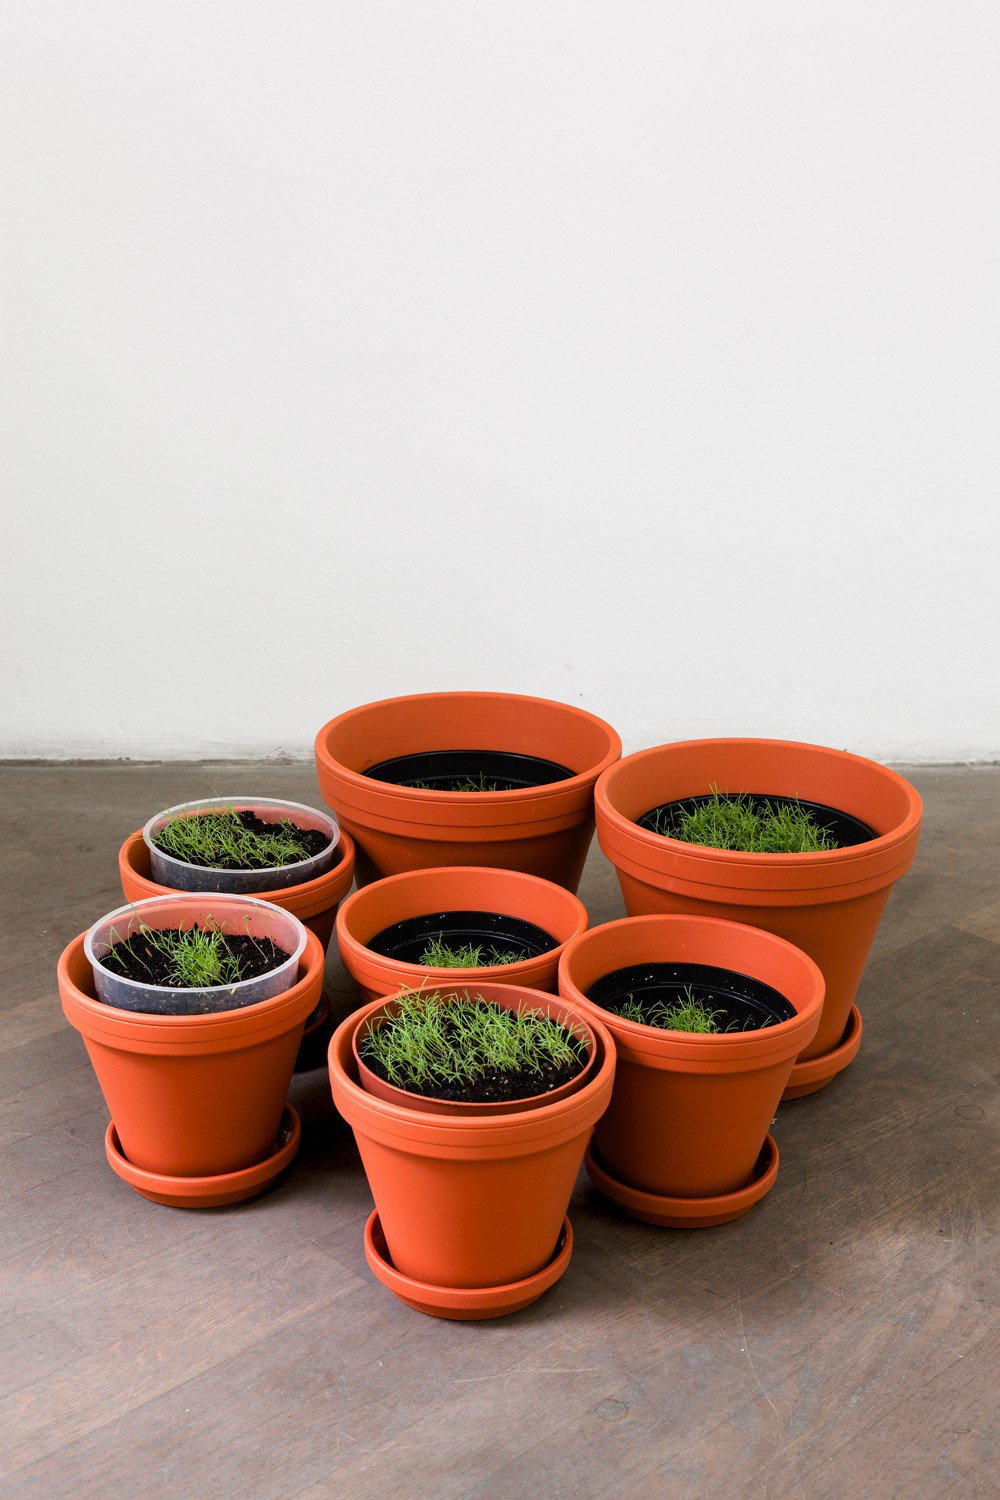 Marius EnghEschscholzia Californica, 20137 flower pots, californian poppy seeds, soil, waterDimensions variable